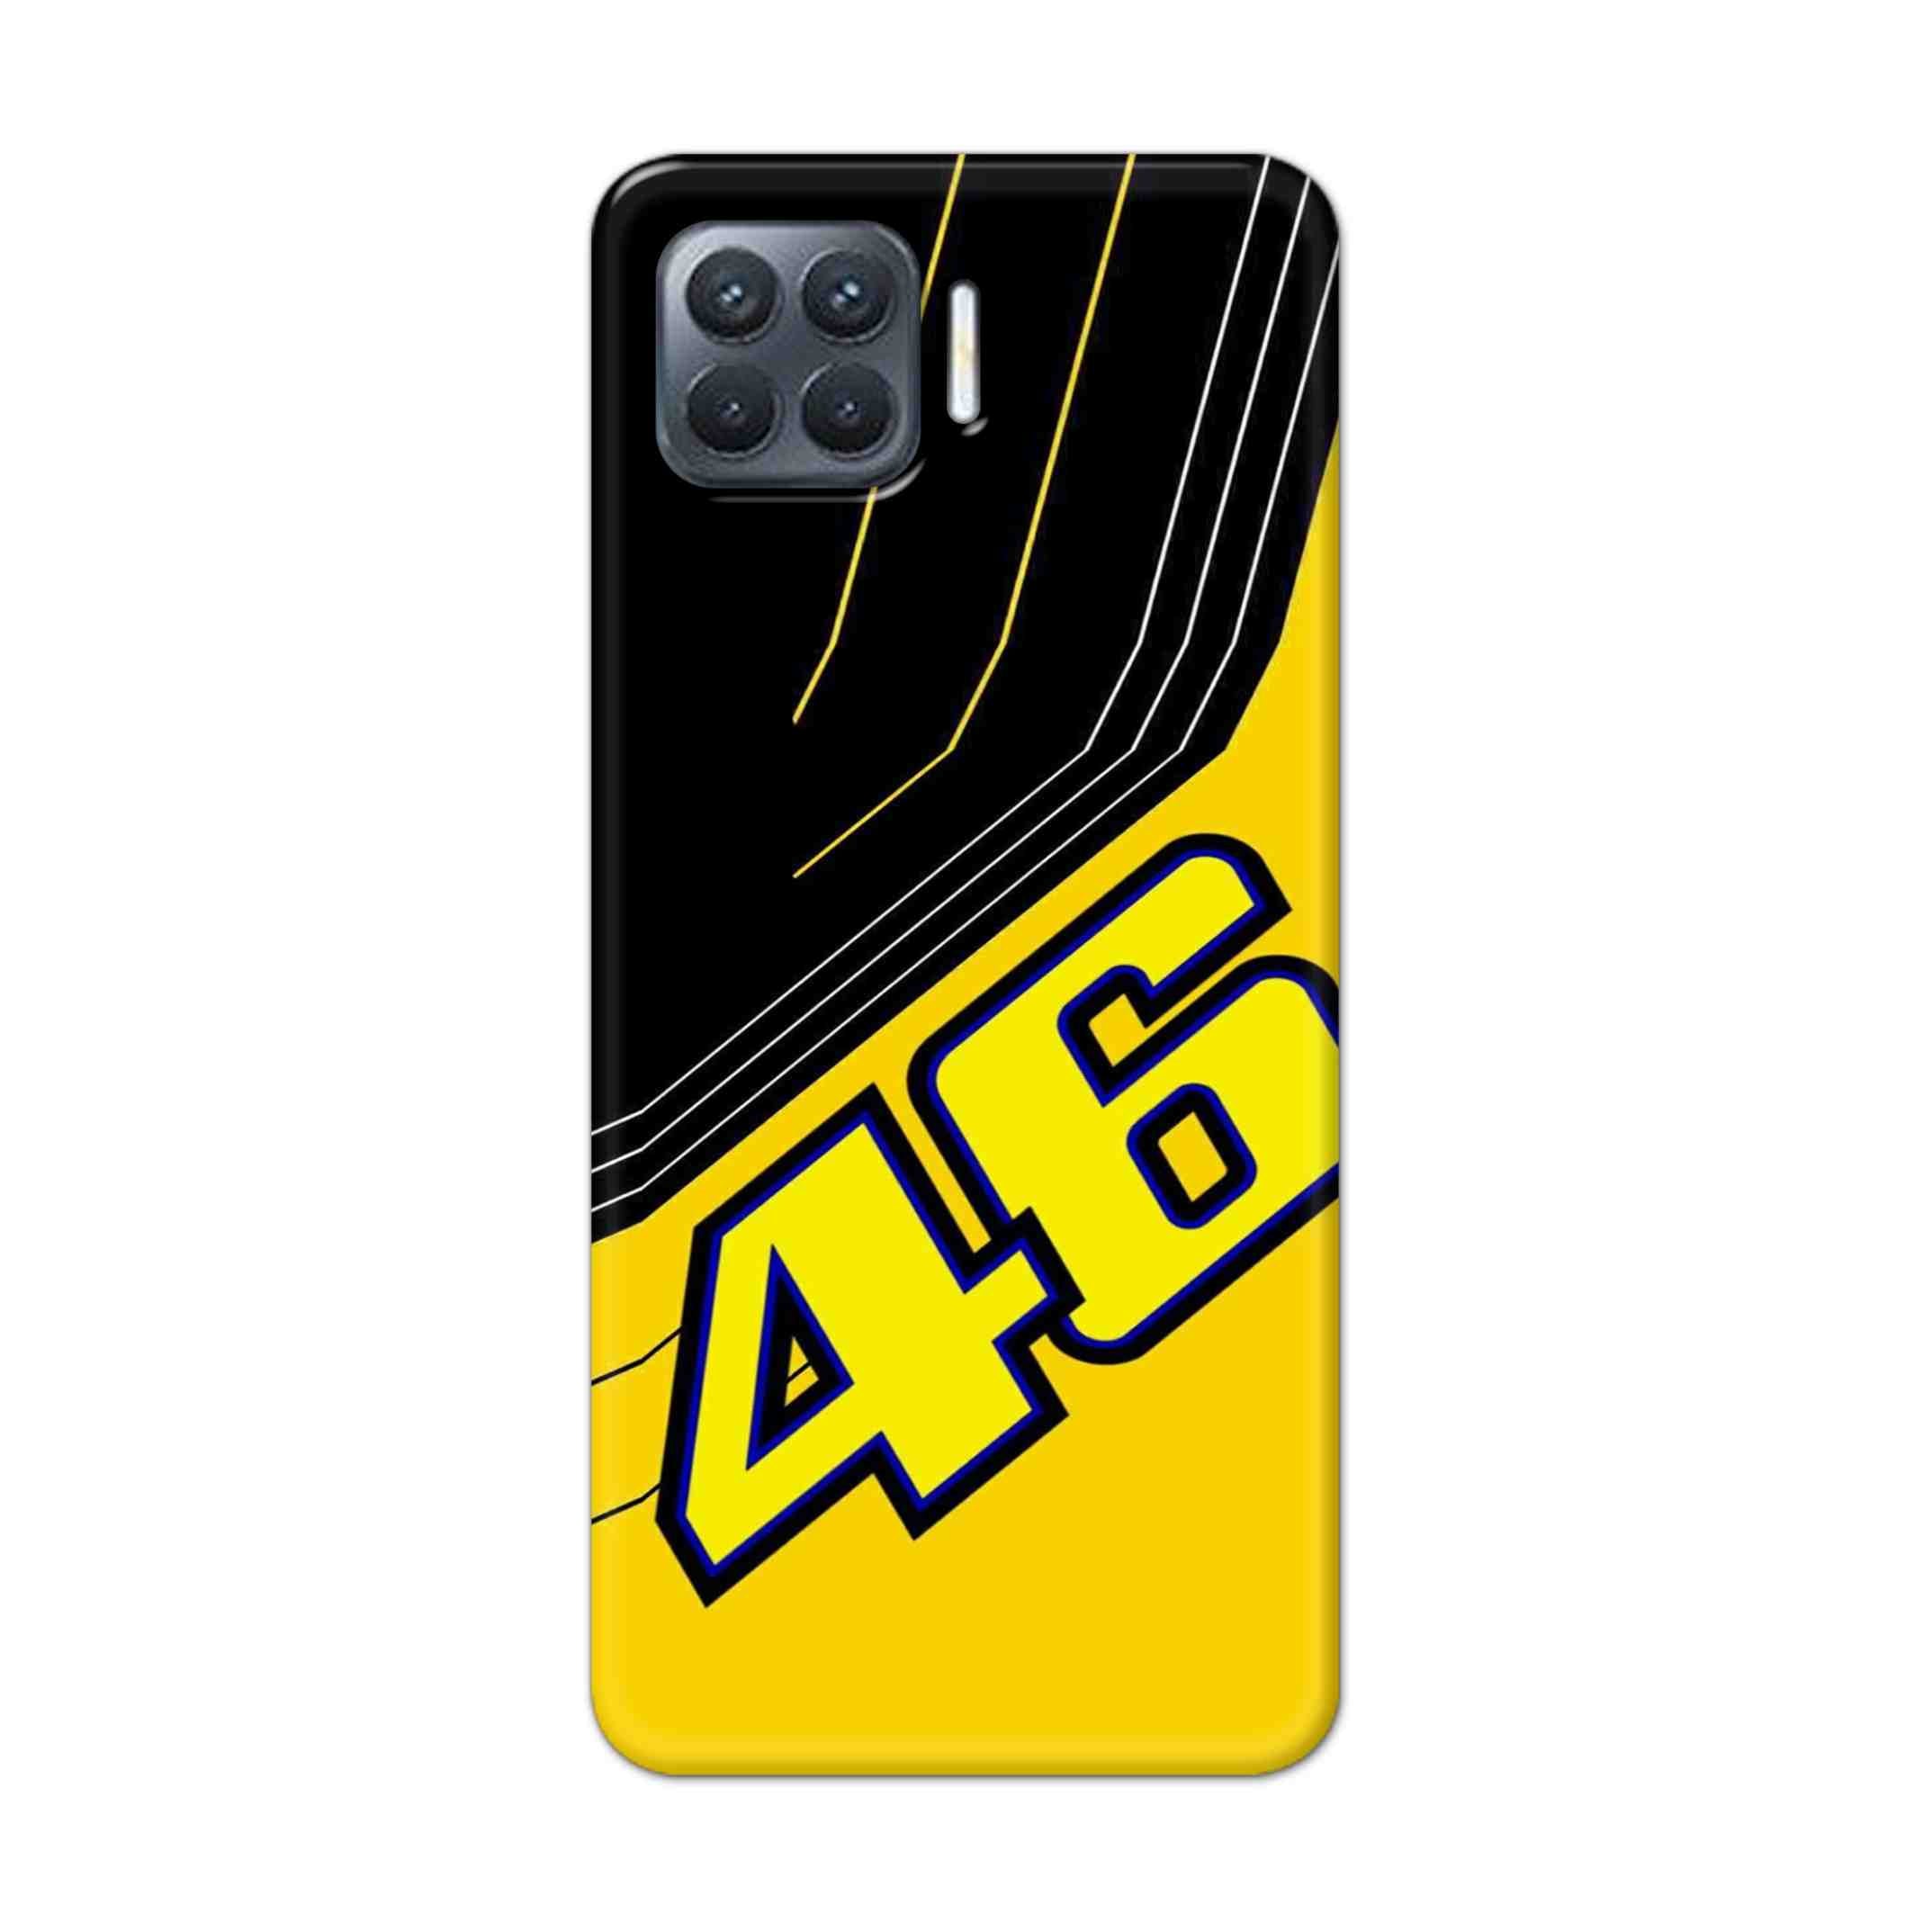 Buy 46 Hard Back Mobile Phone Case Cover For Oppo F17 Pro Online